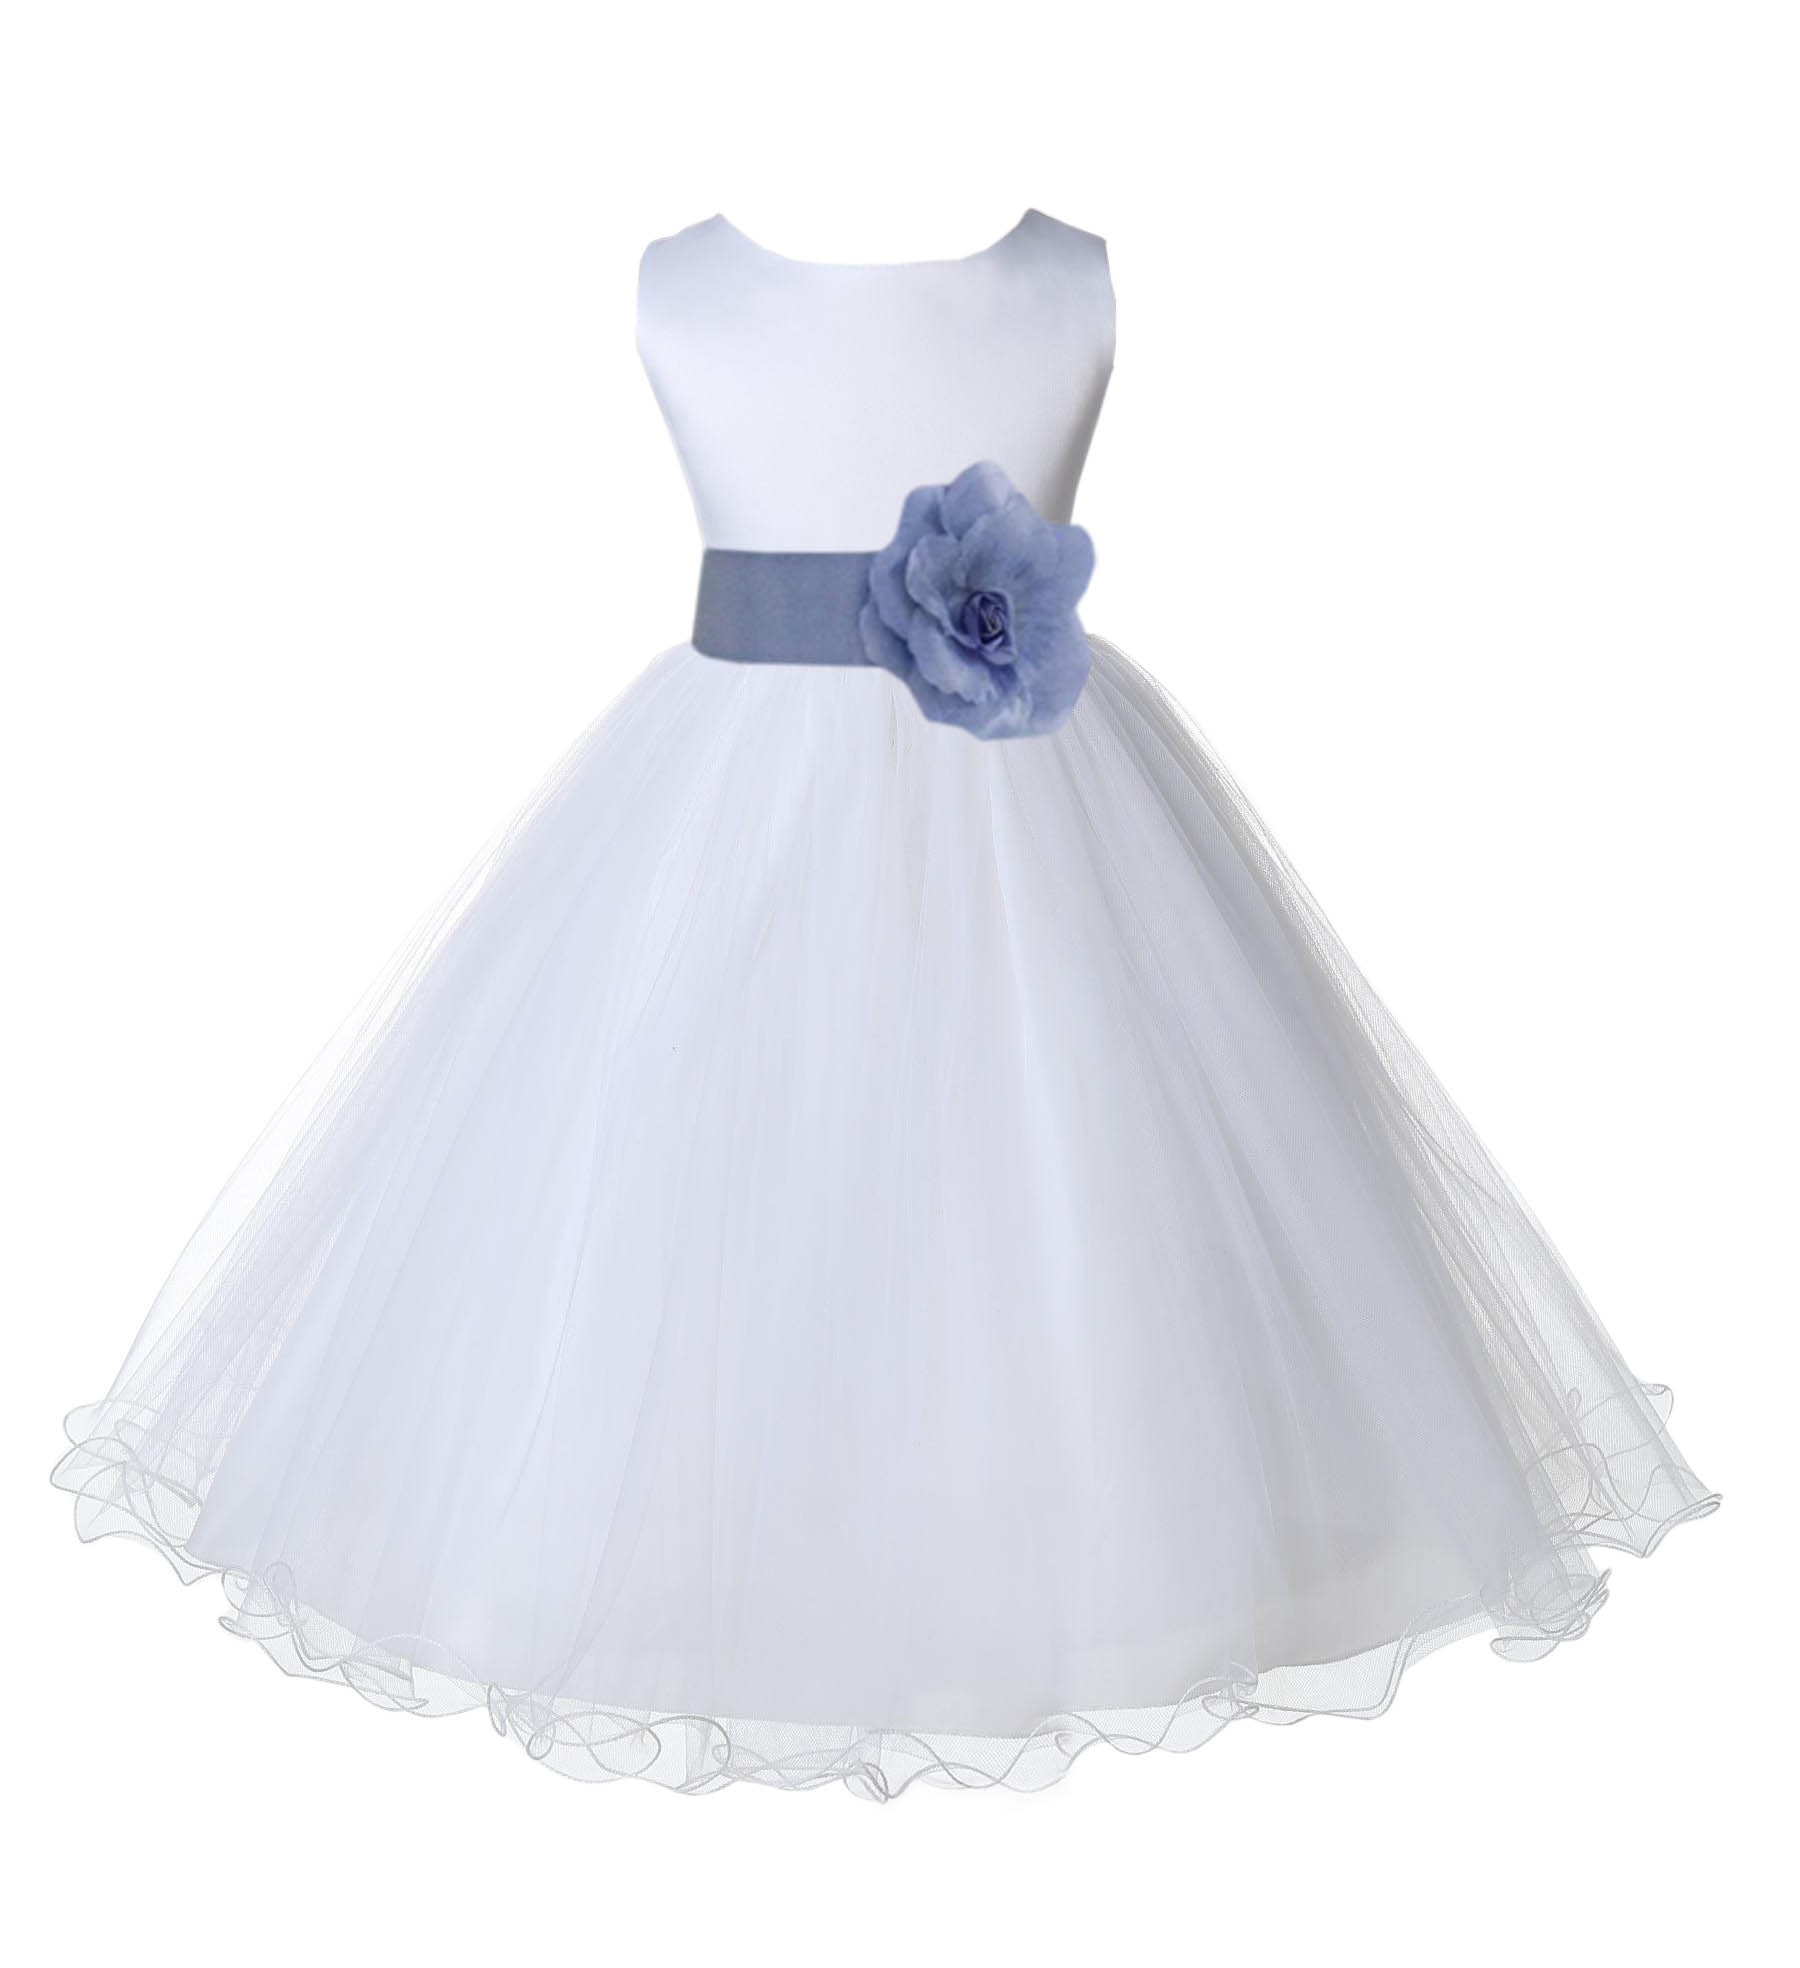 White/Bluebird Tulle Rattail Edge Flower Girl Dress Wedding Bridesmaid 829T